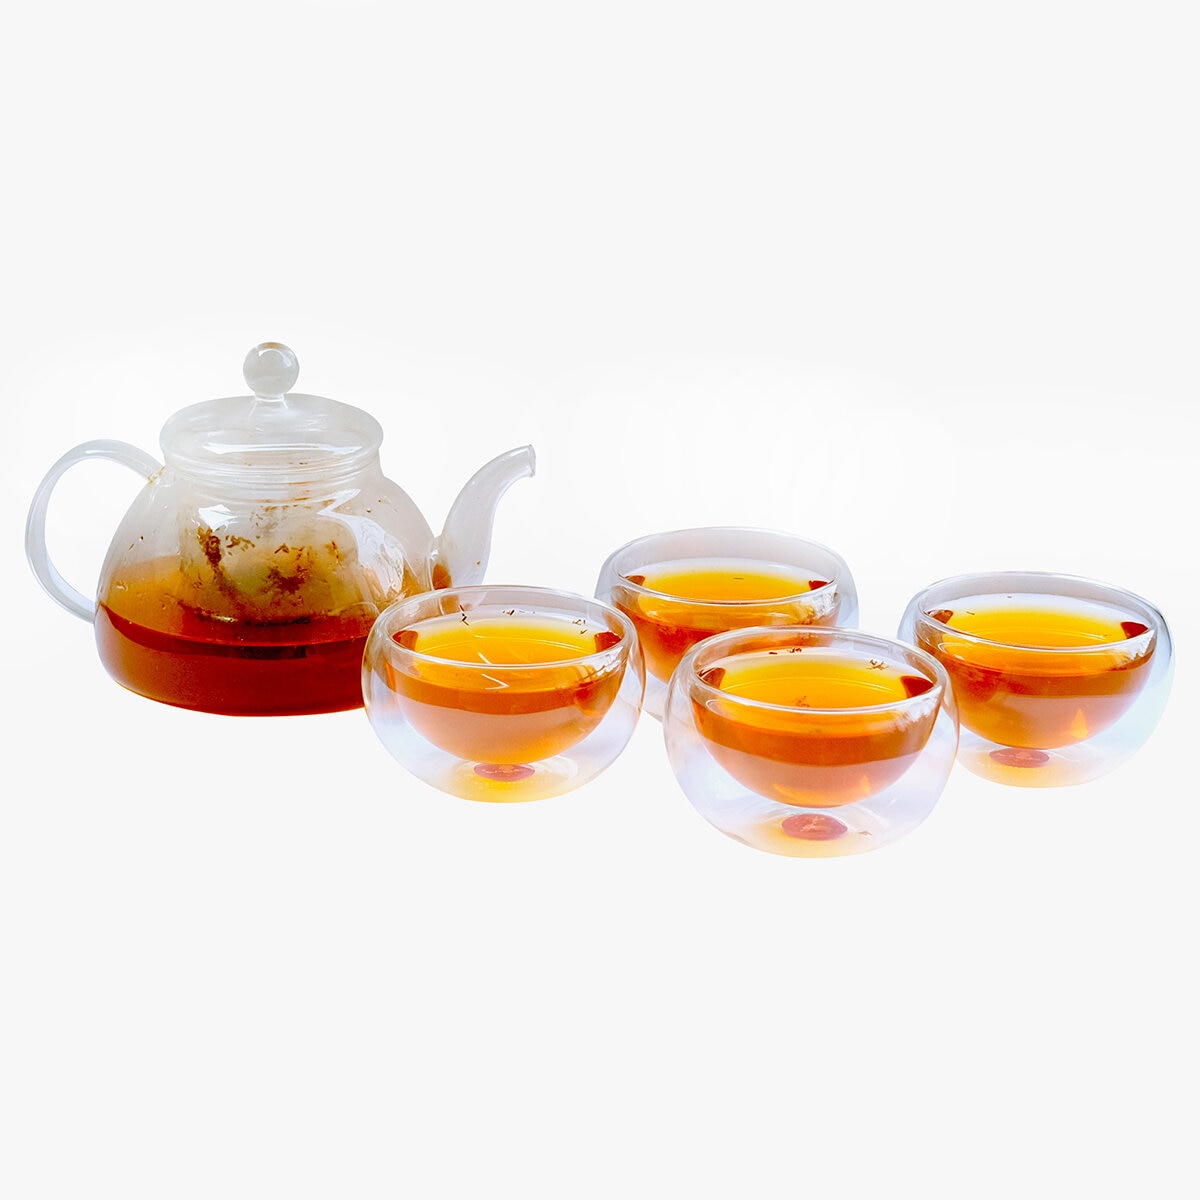 Zoma Tea Colección de Juego de Tetera con 4 tazas de Doble Cristal y un Té 80 g